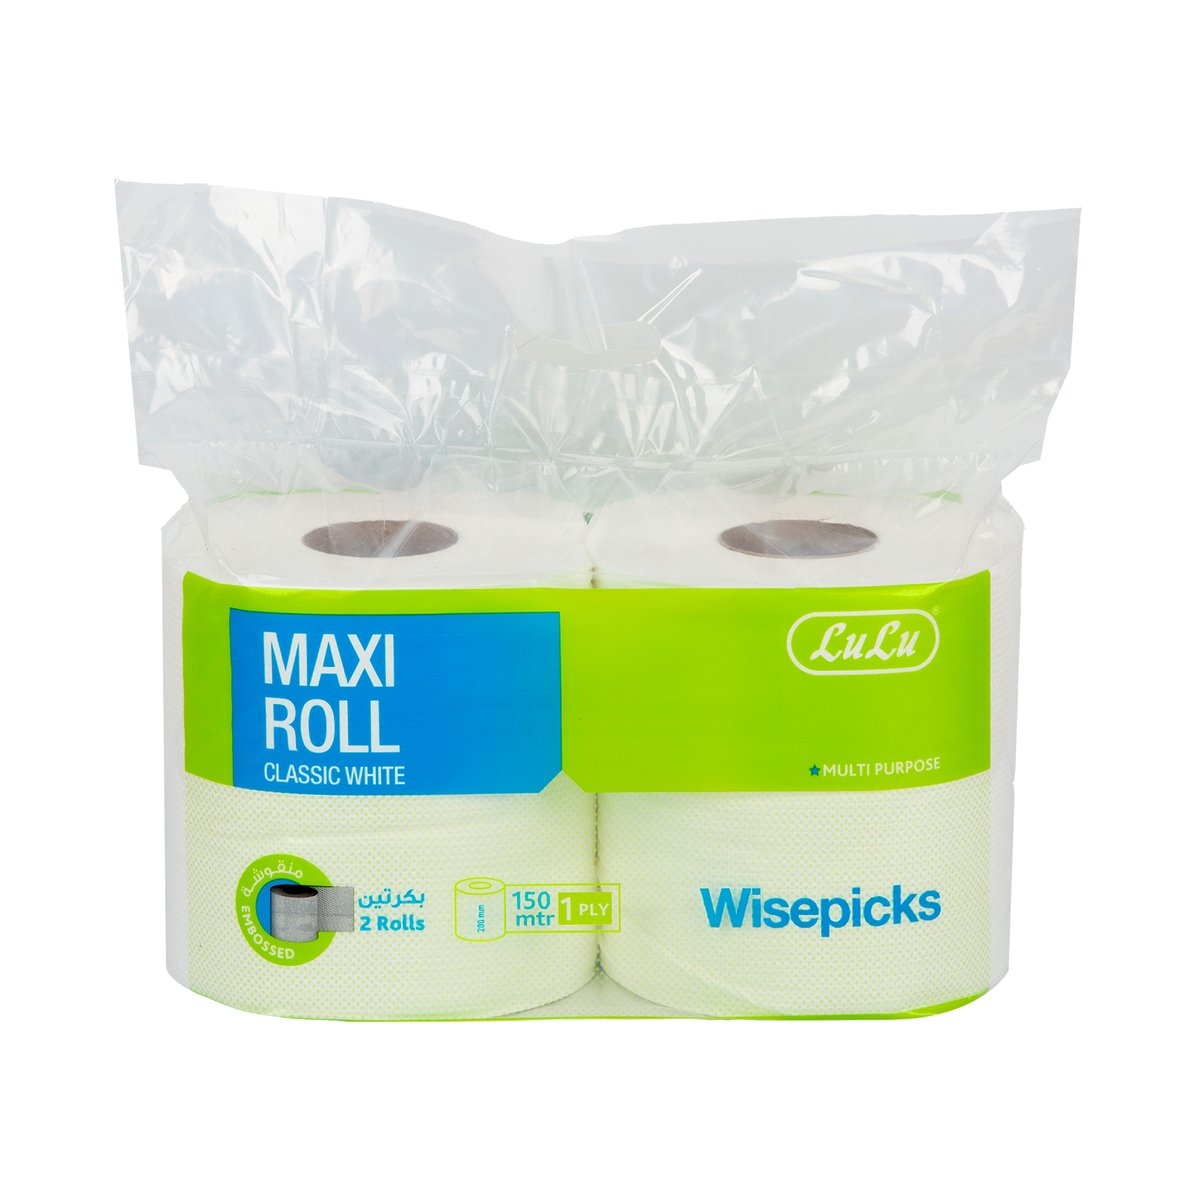 Lulu PL LuLu Wisepicks Classic White Maxi Roll 1ply 150mtr 2 Rolls